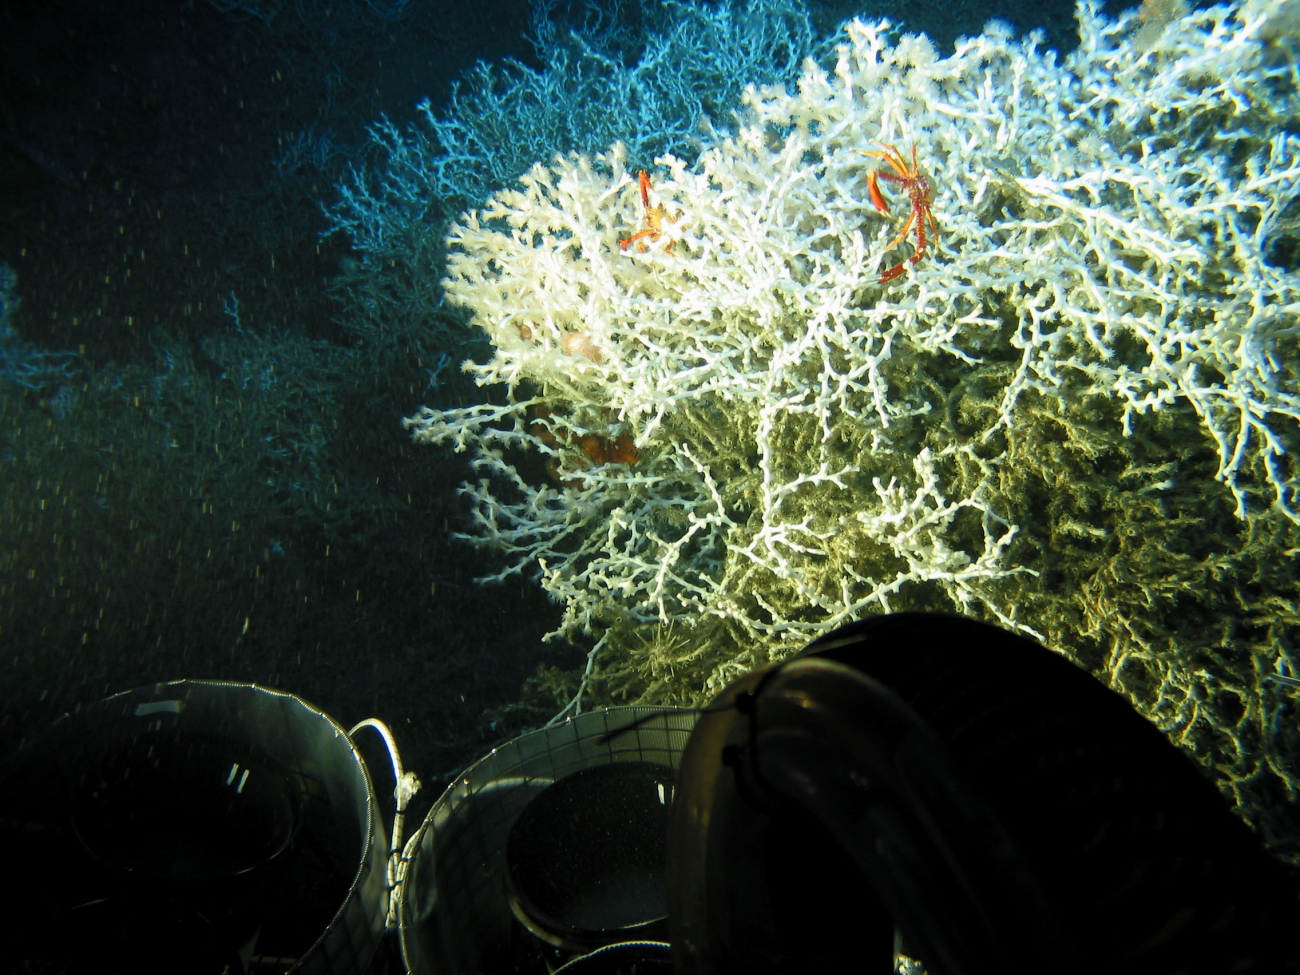 Deep-sea corals form important habitats for unique and diverse array of marinelife